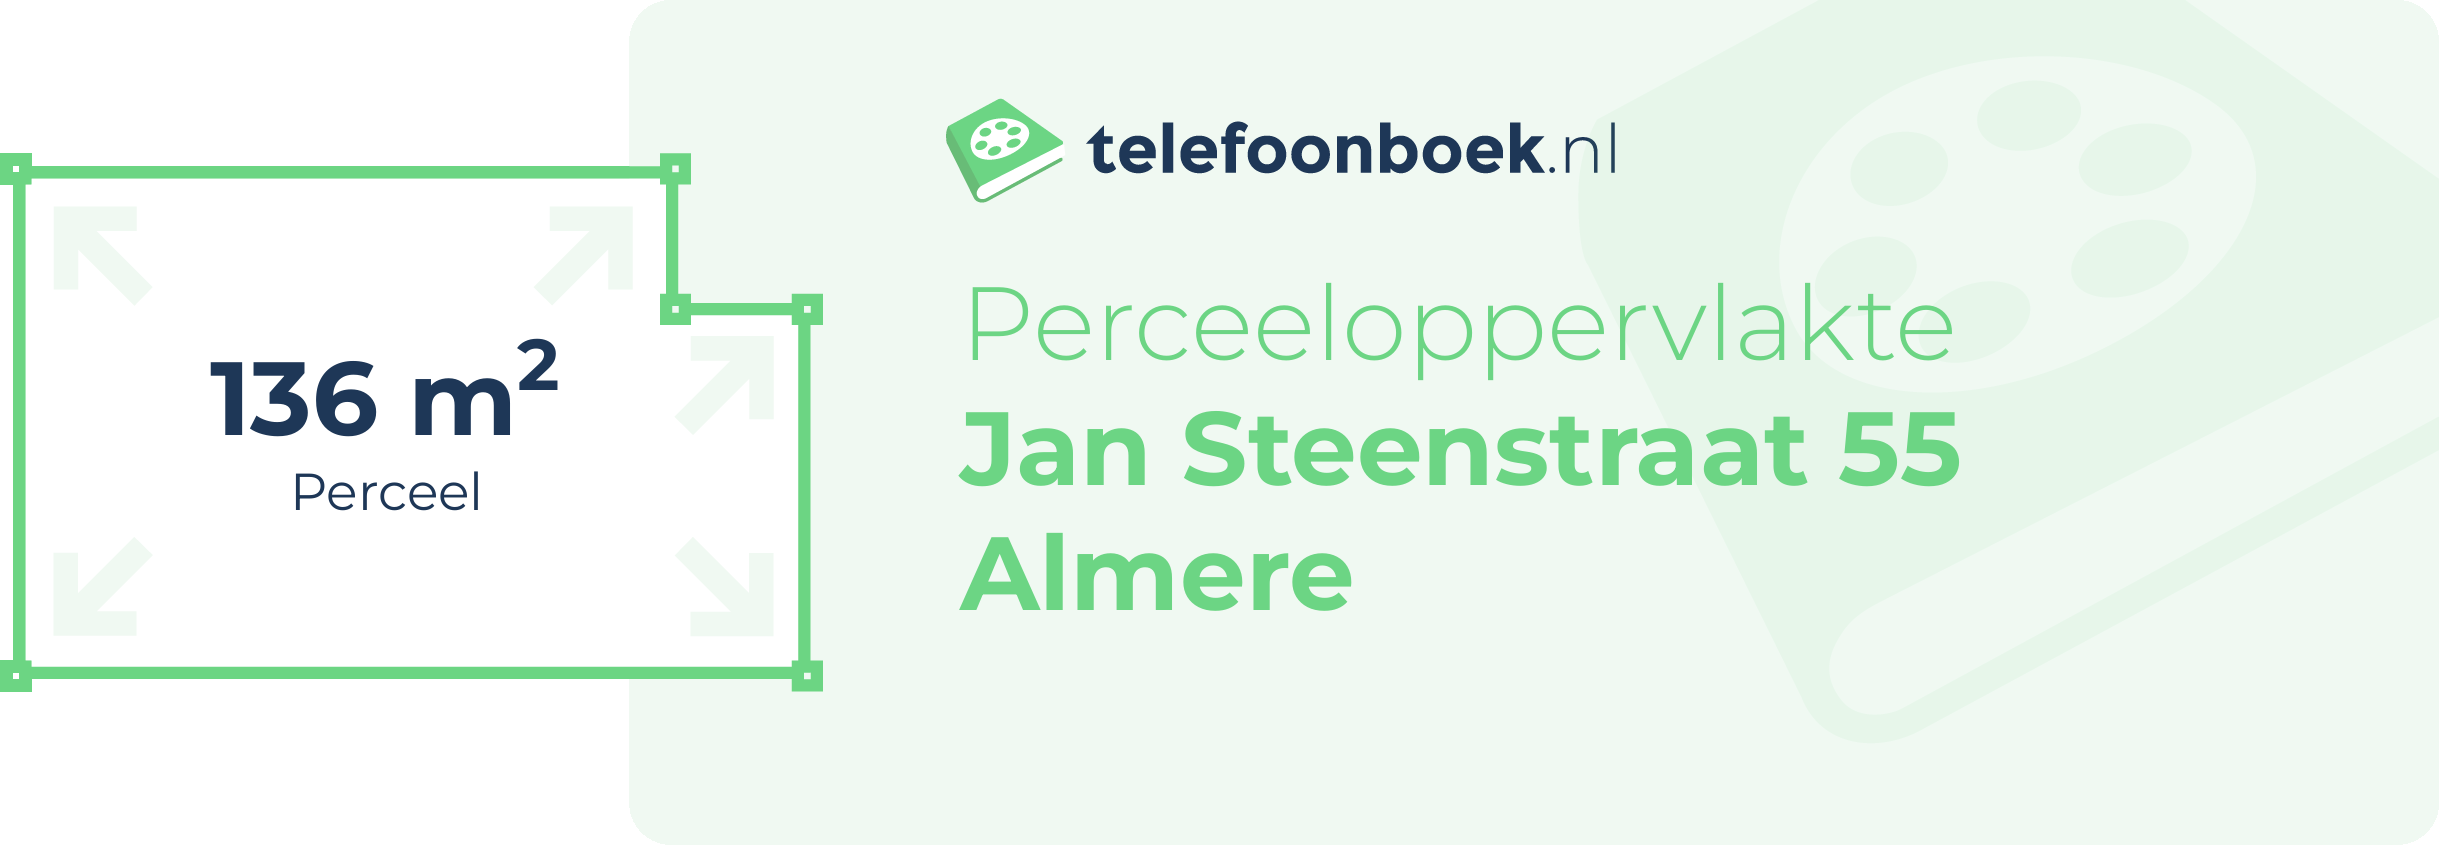 Perceeloppervlakte Jan Steenstraat 55 Almere